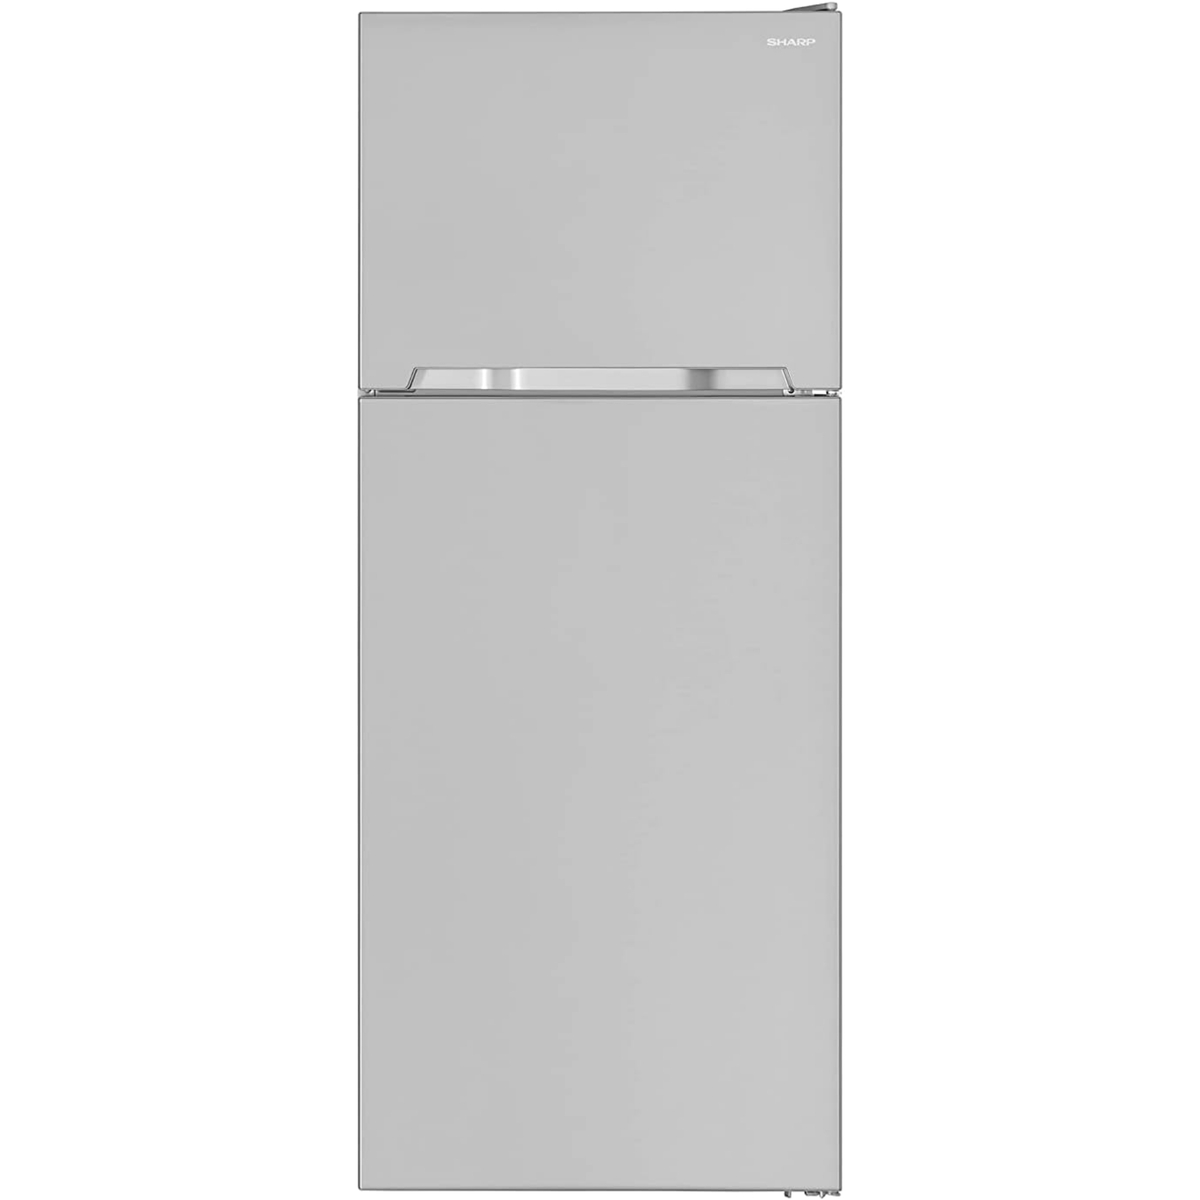 Sharp Double Door Refrigerator, 400 L , Inox Silver, SJ-SR525-SS3